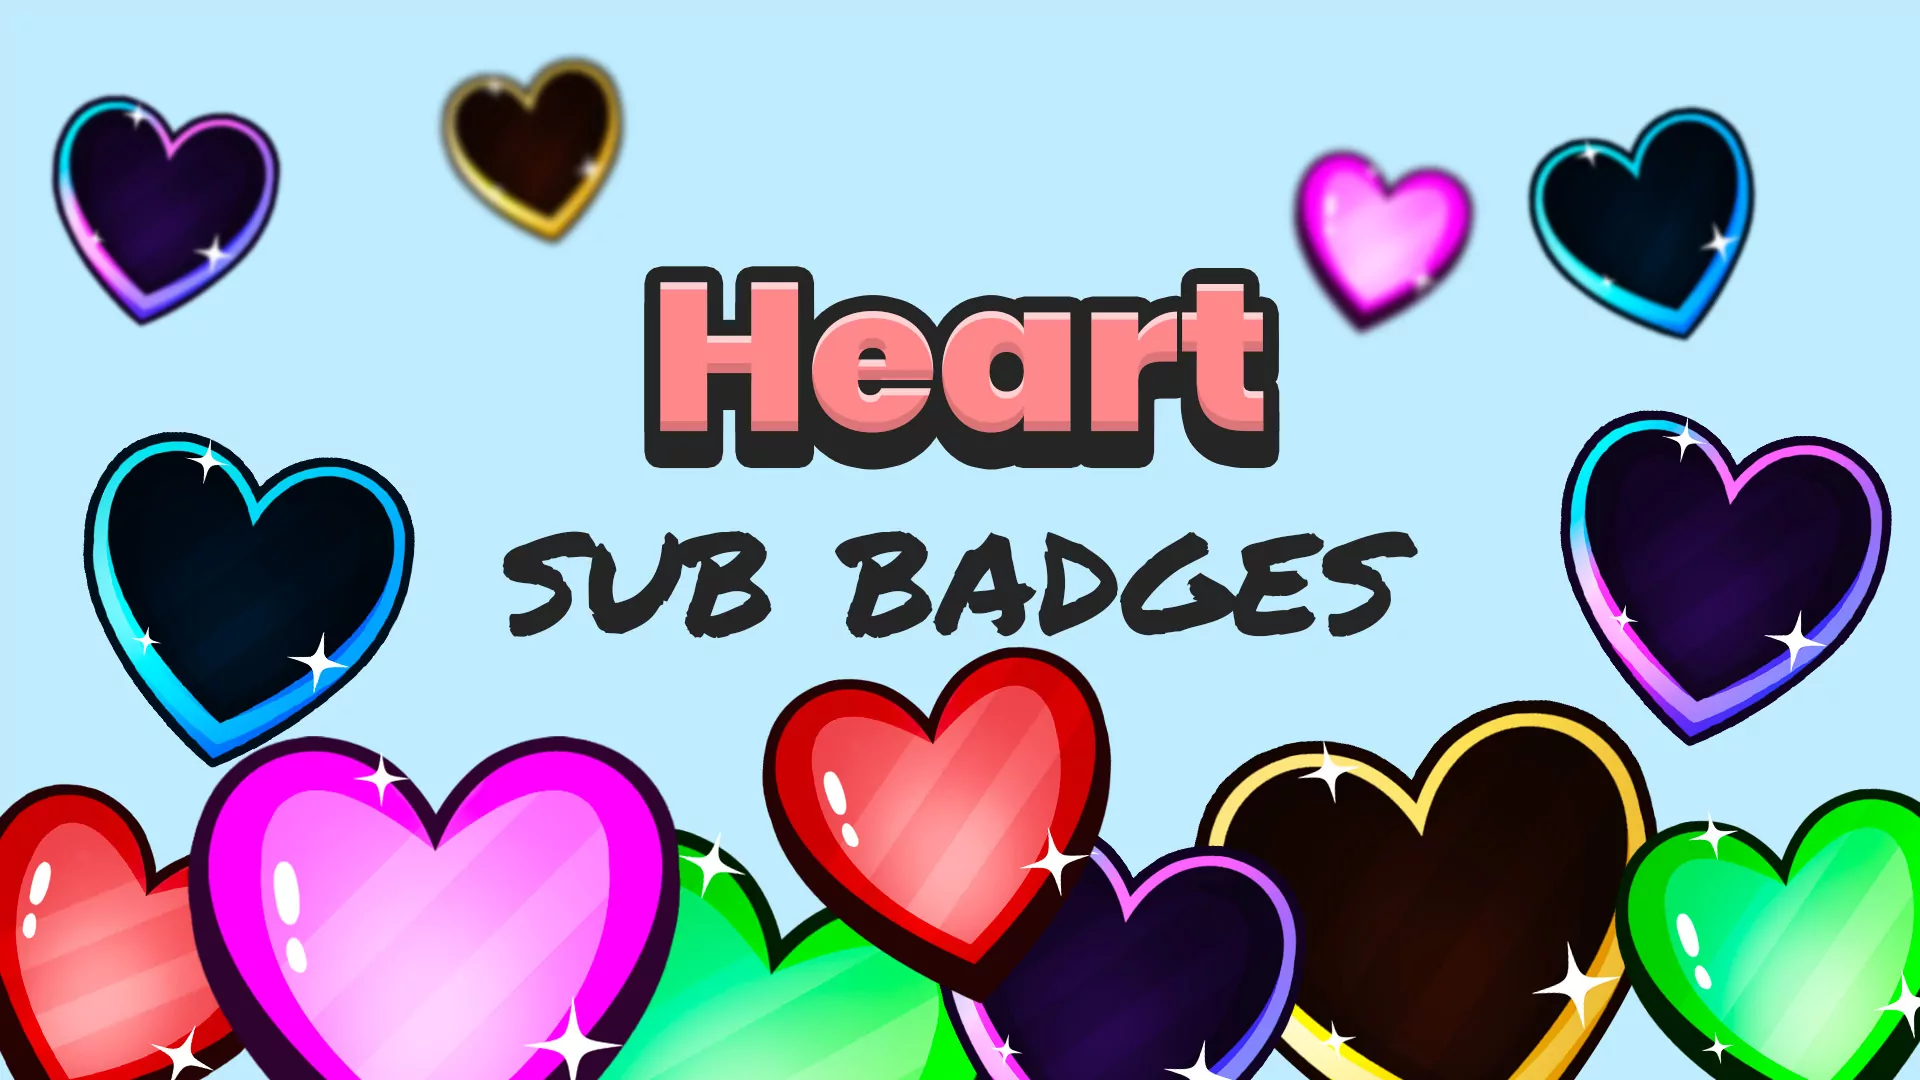 Heart Twitch Sub Badge Thumbnail